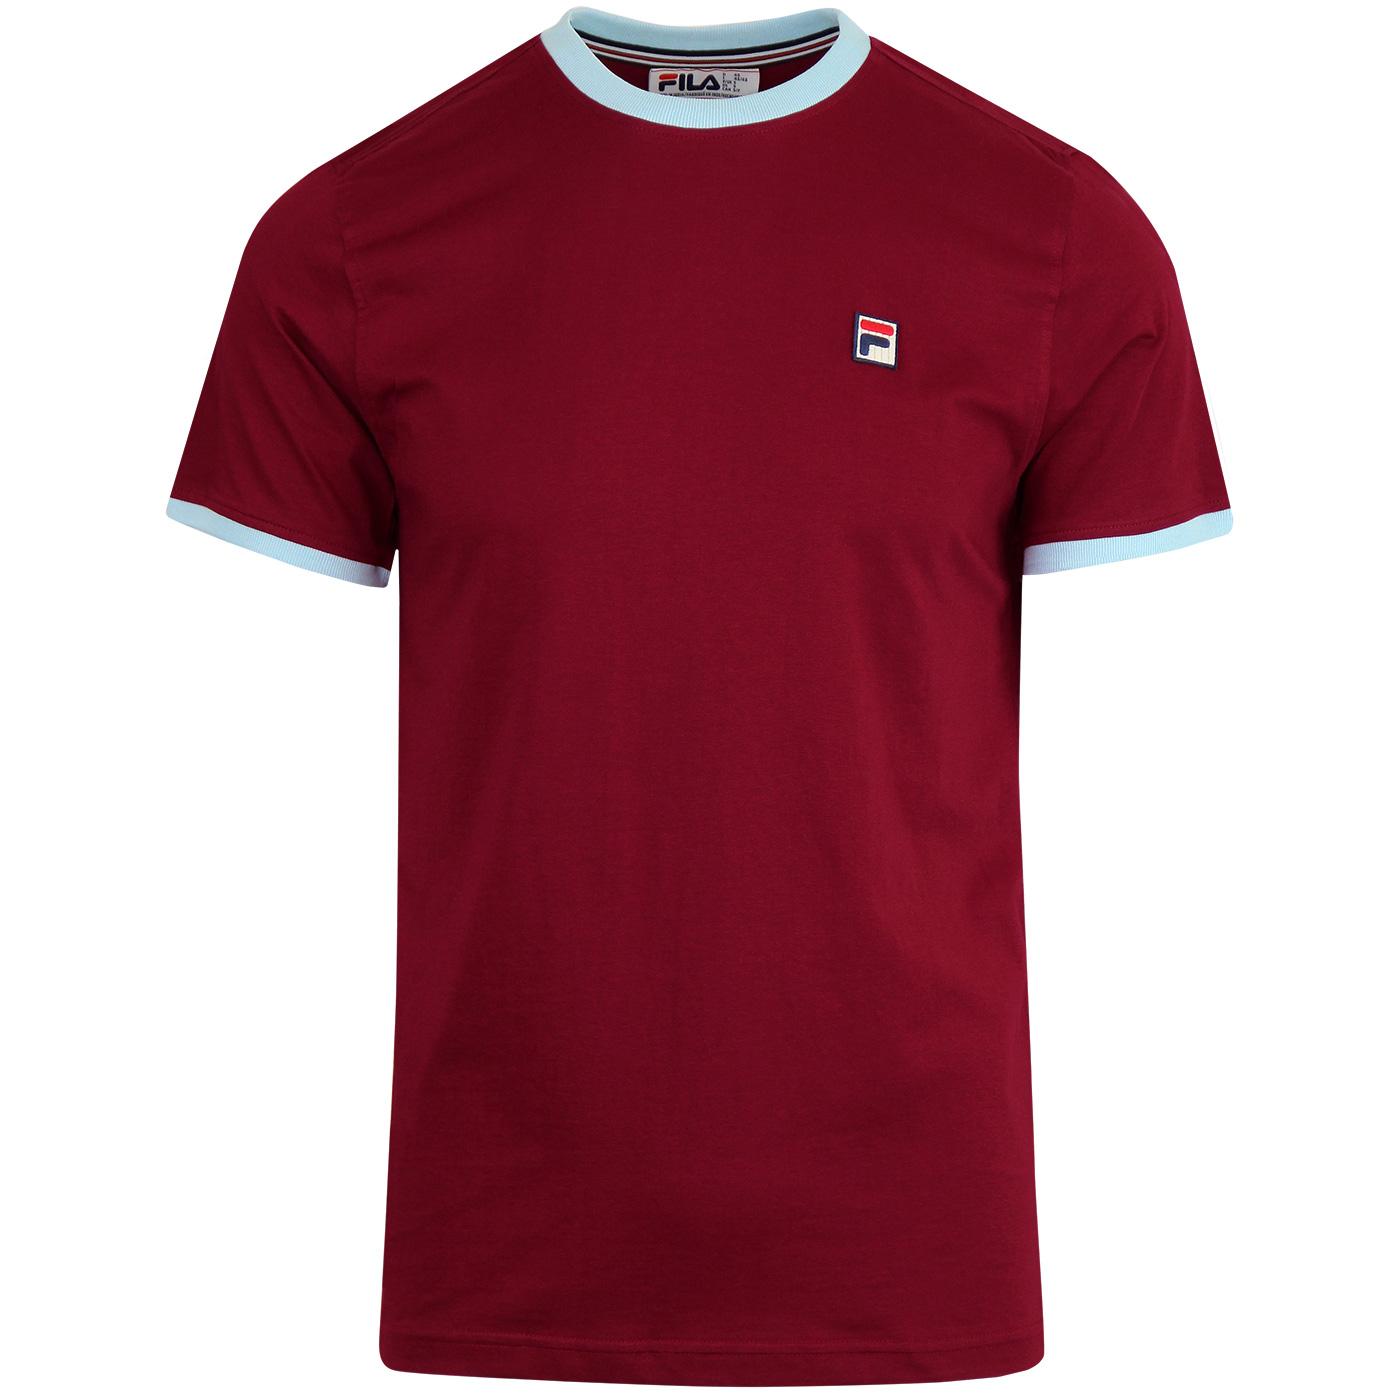 FILA VINTAGE Marconi Retro 70s Ringer T-Shirt Tibetan Red